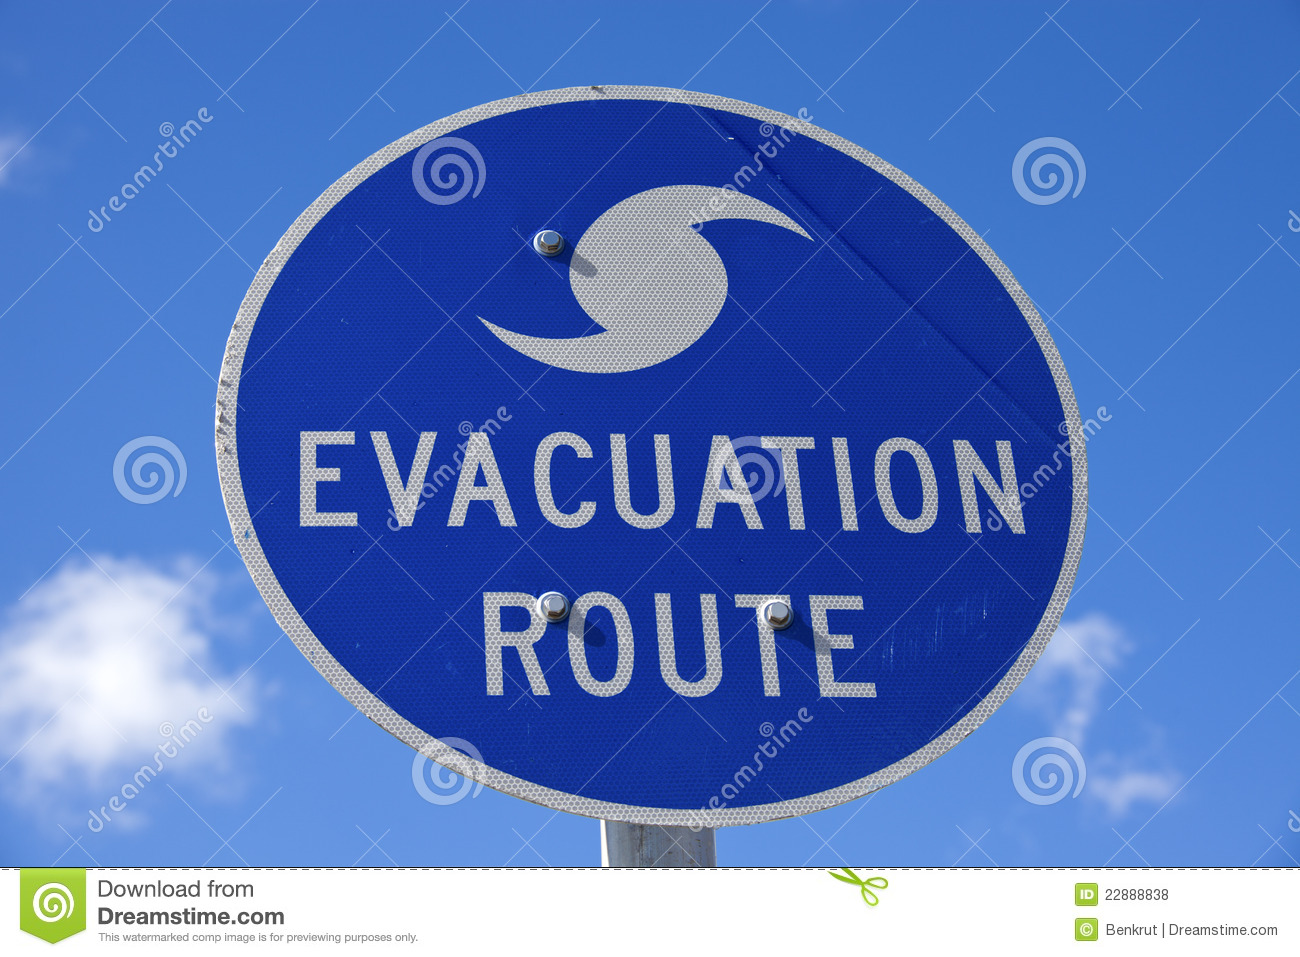 Evacuation Route Royalty Free Stock Photos   Image  22888838